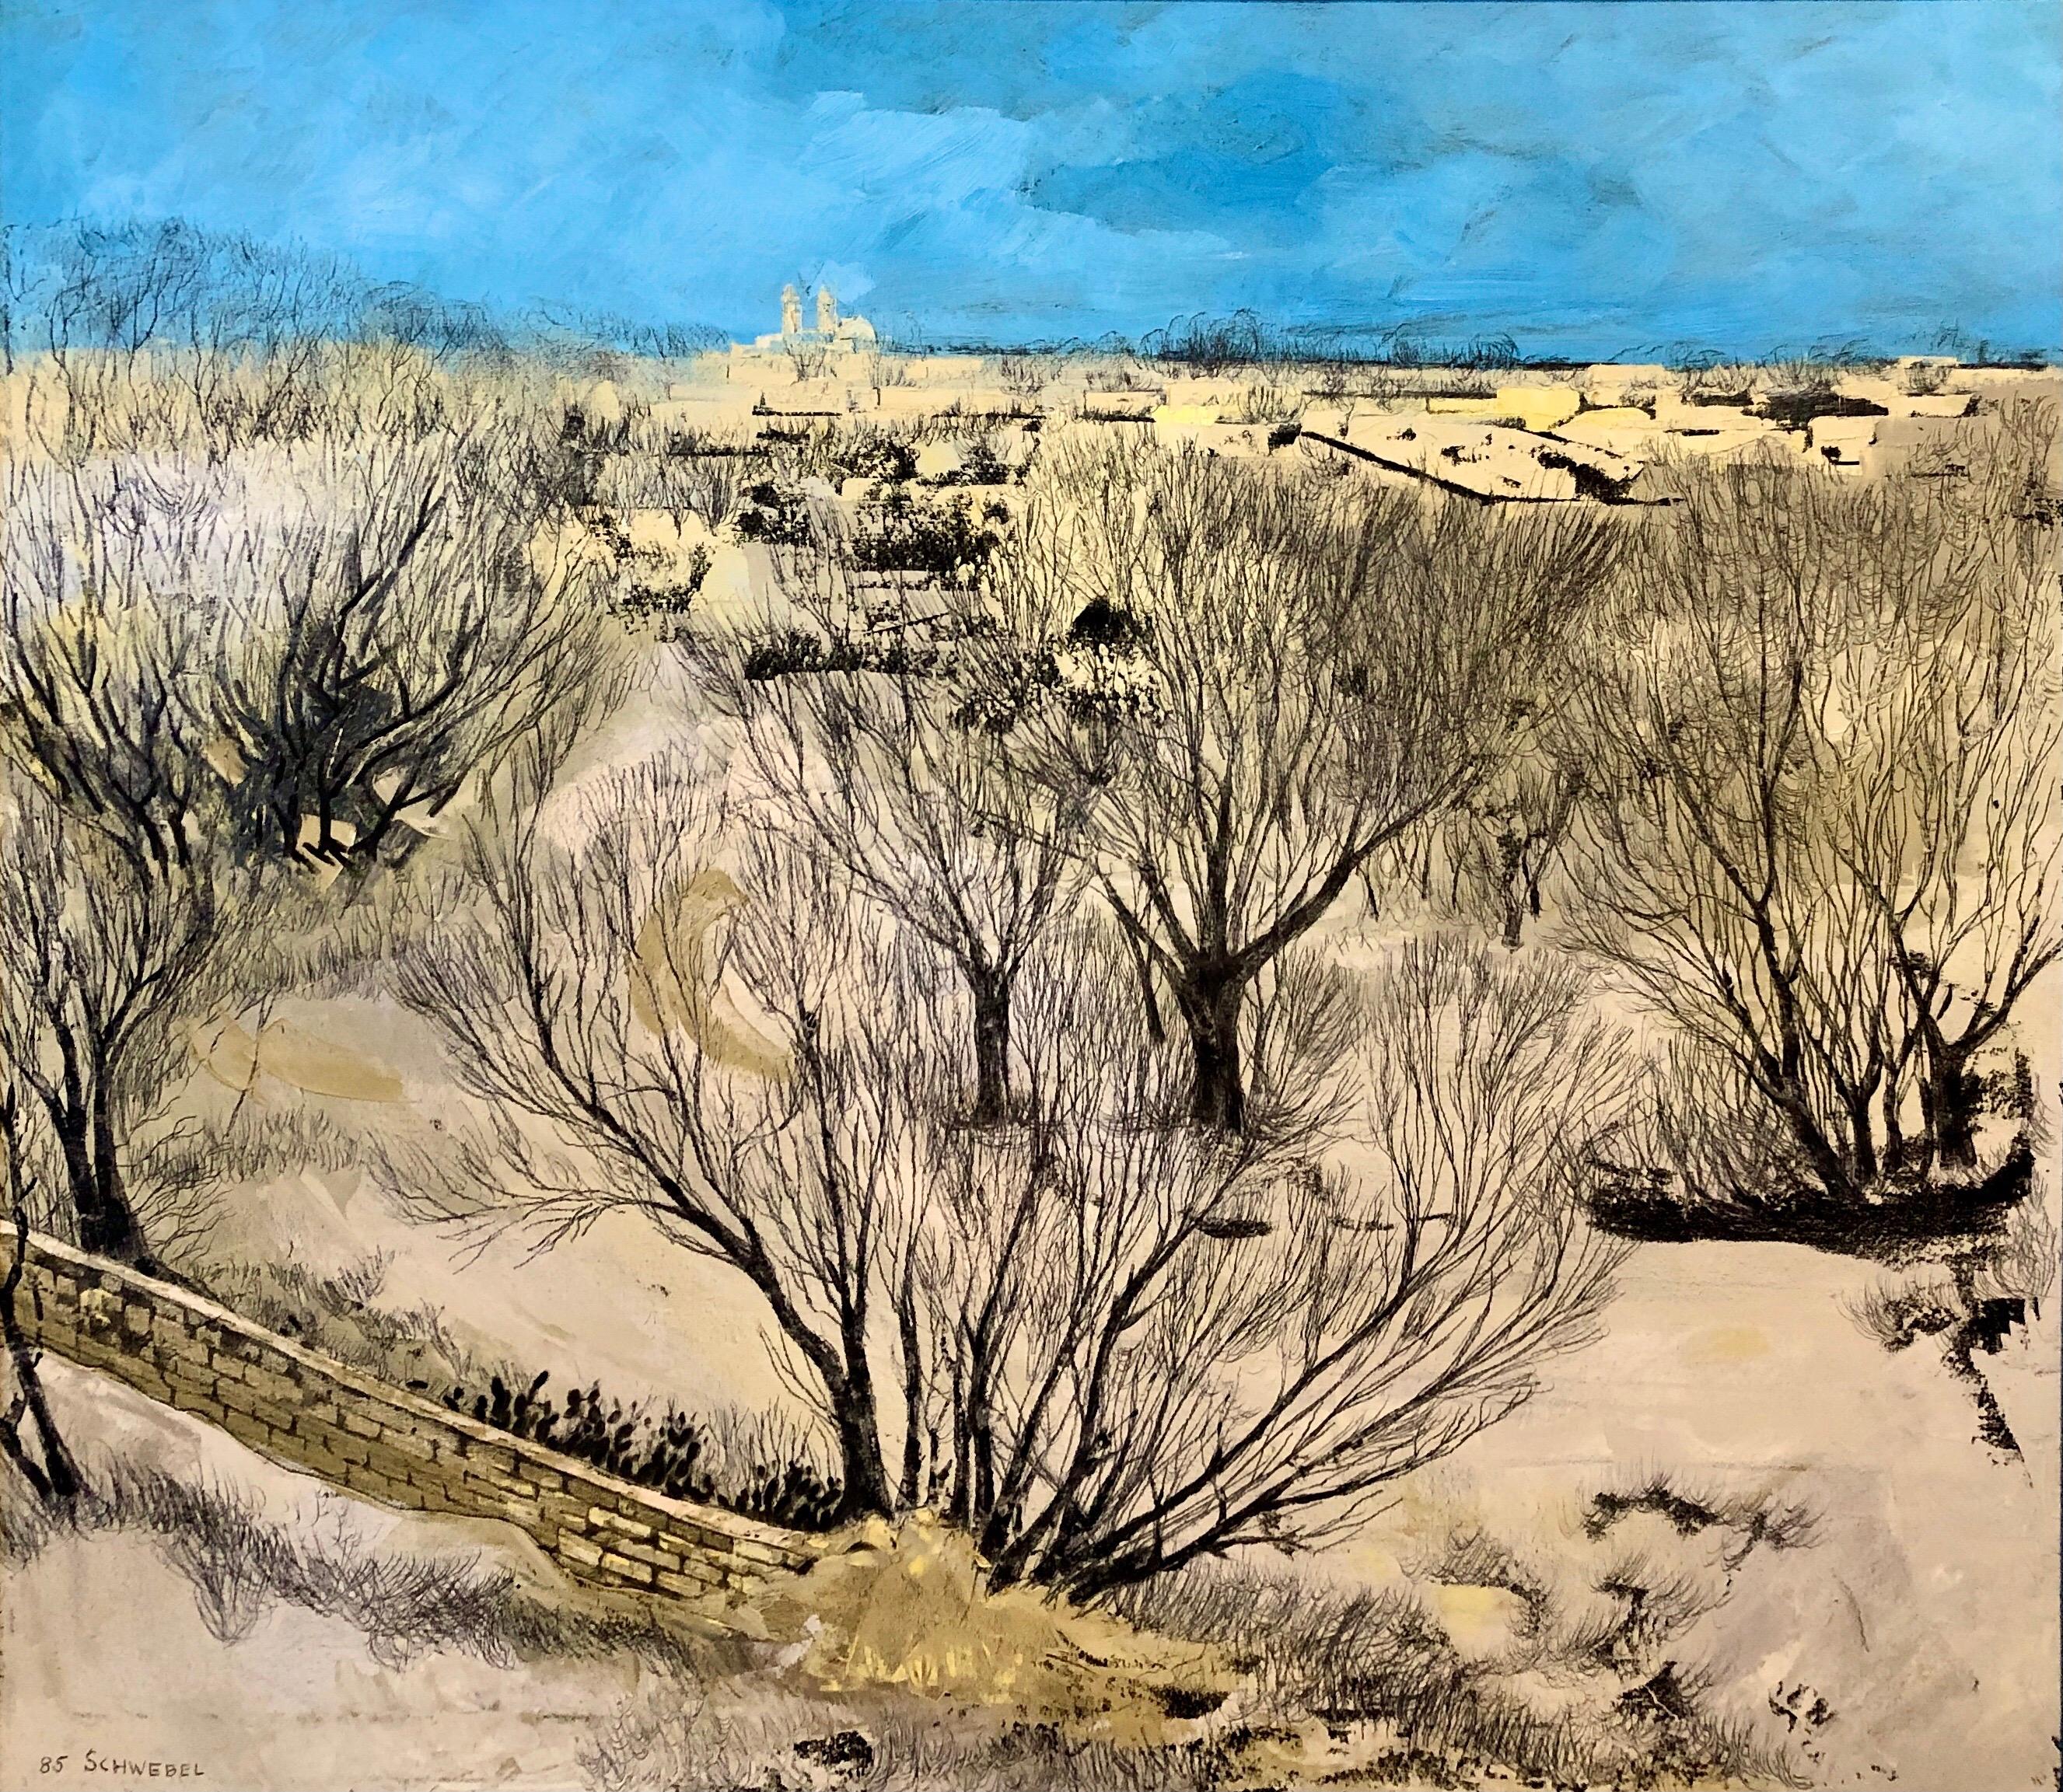 Ivan Schwebel Landscape Painting - Jerusalem Modernist Landscape Oil Painting Israeli Bezalel Artist, Judaica Art